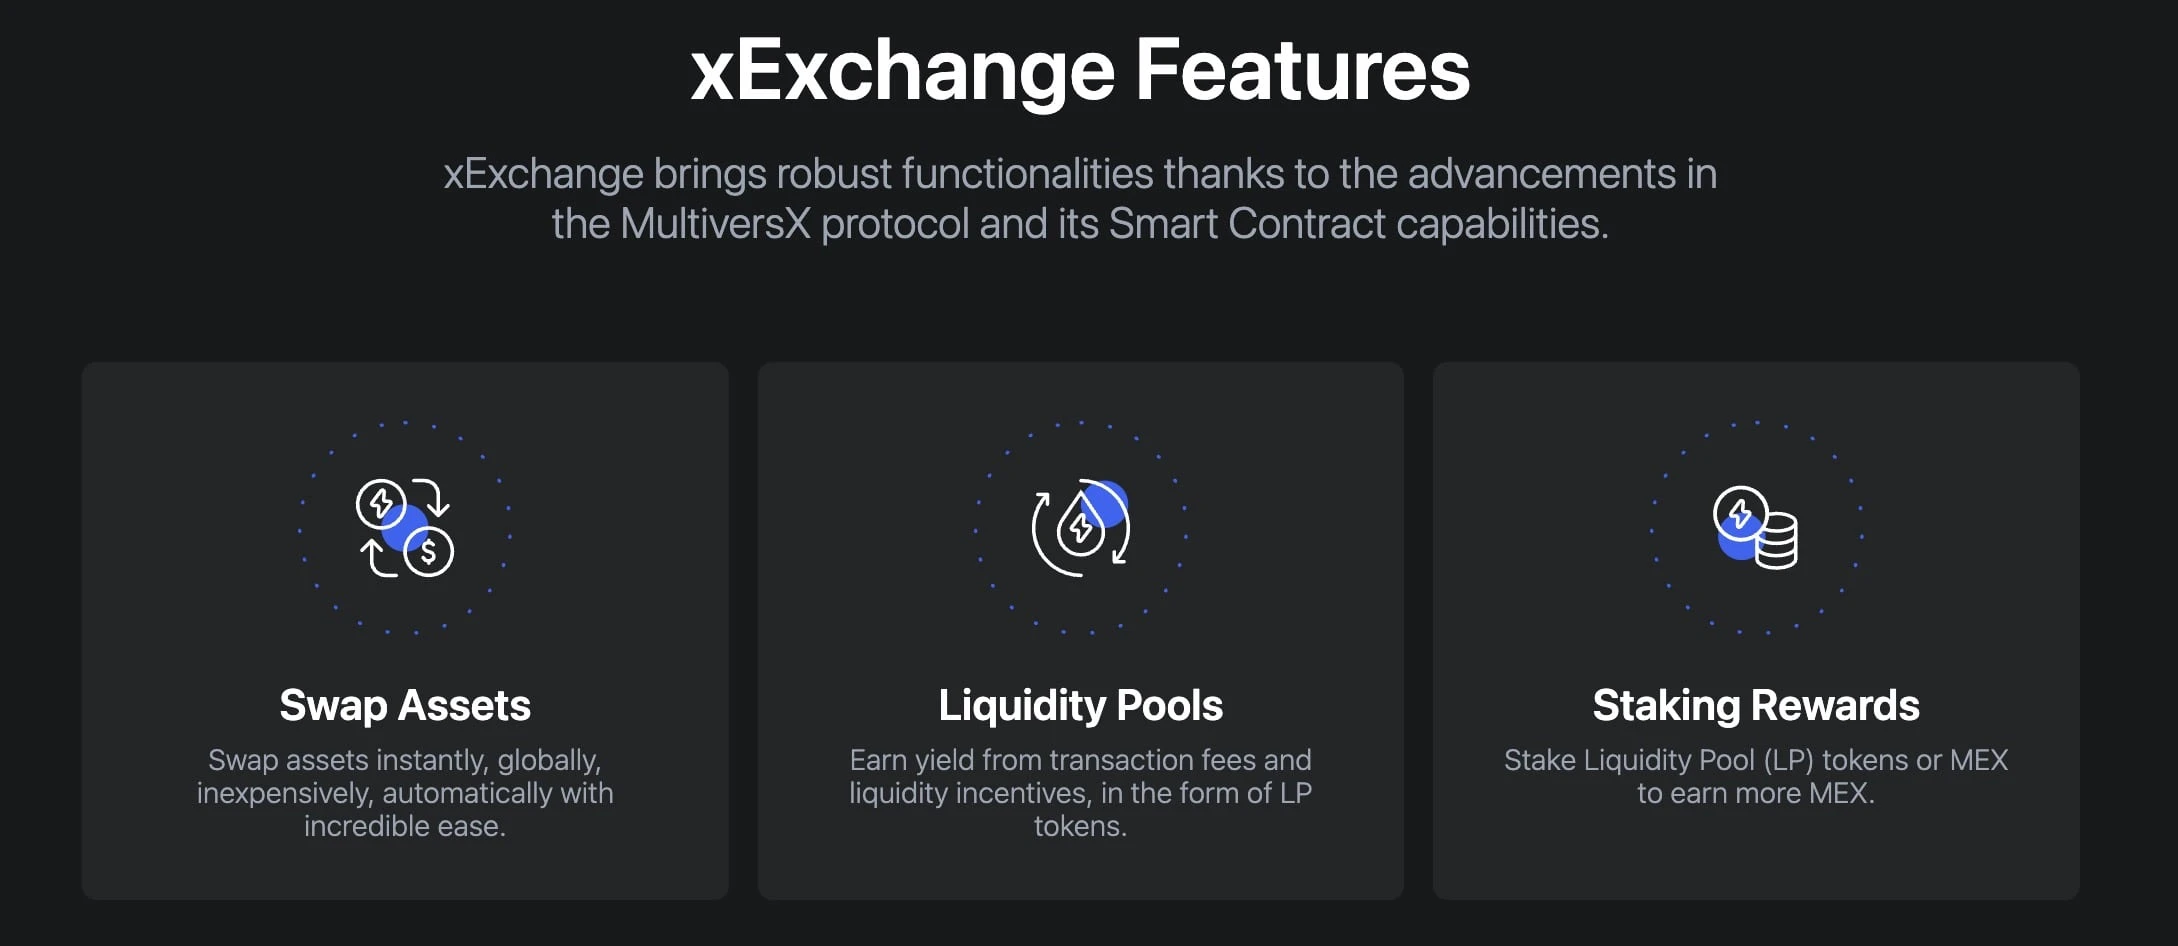 xExchange features